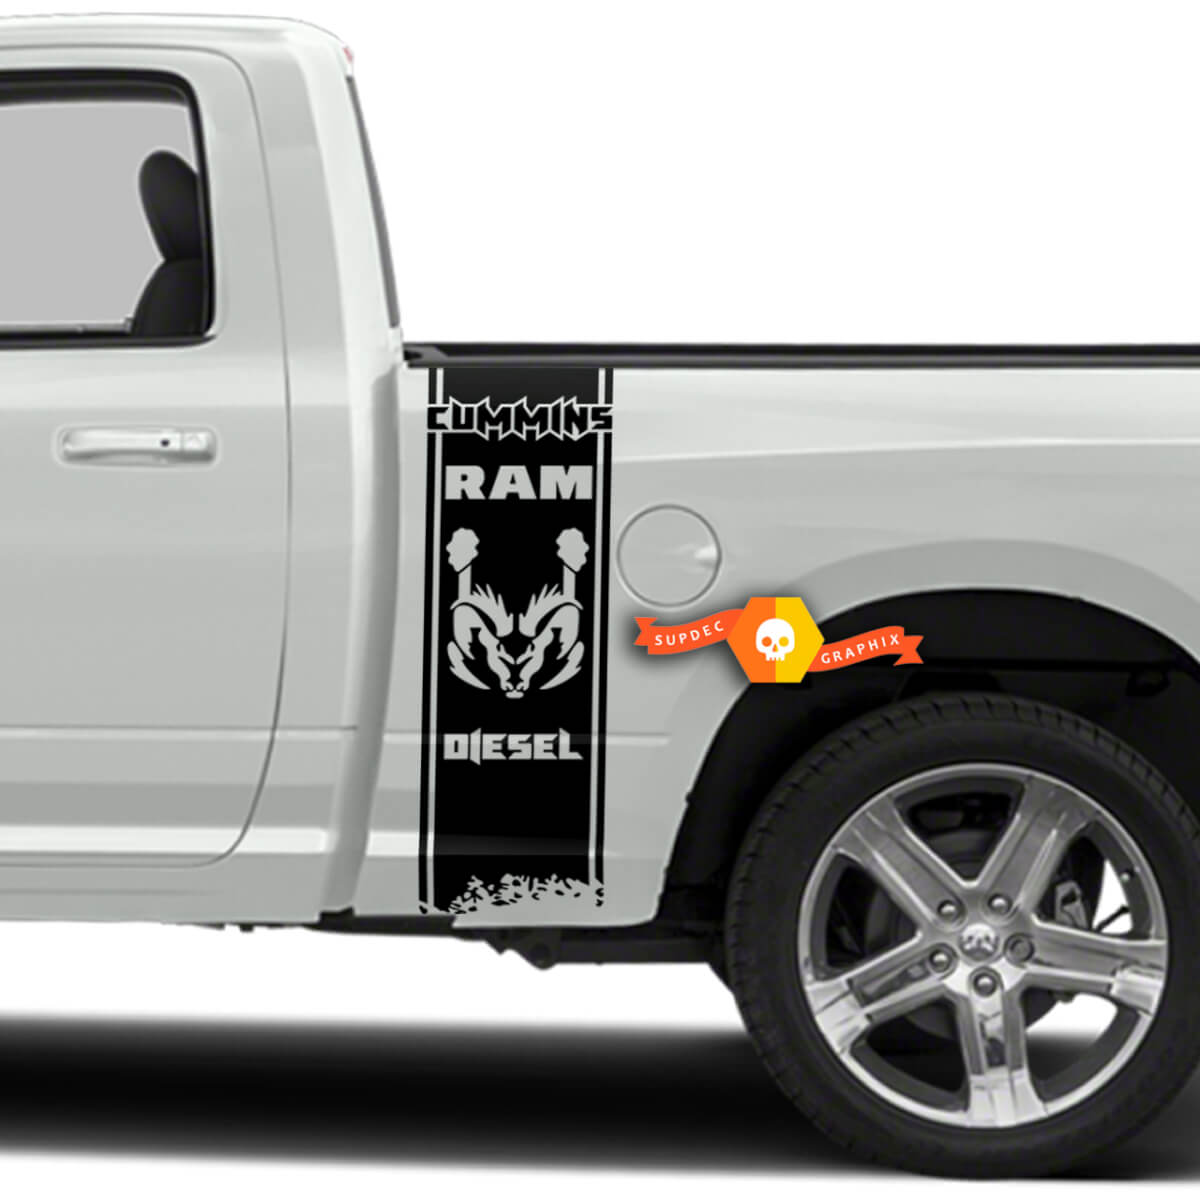 2x Bedside Cummins RAM Diesel decal stickers Dodge Diesel truck
